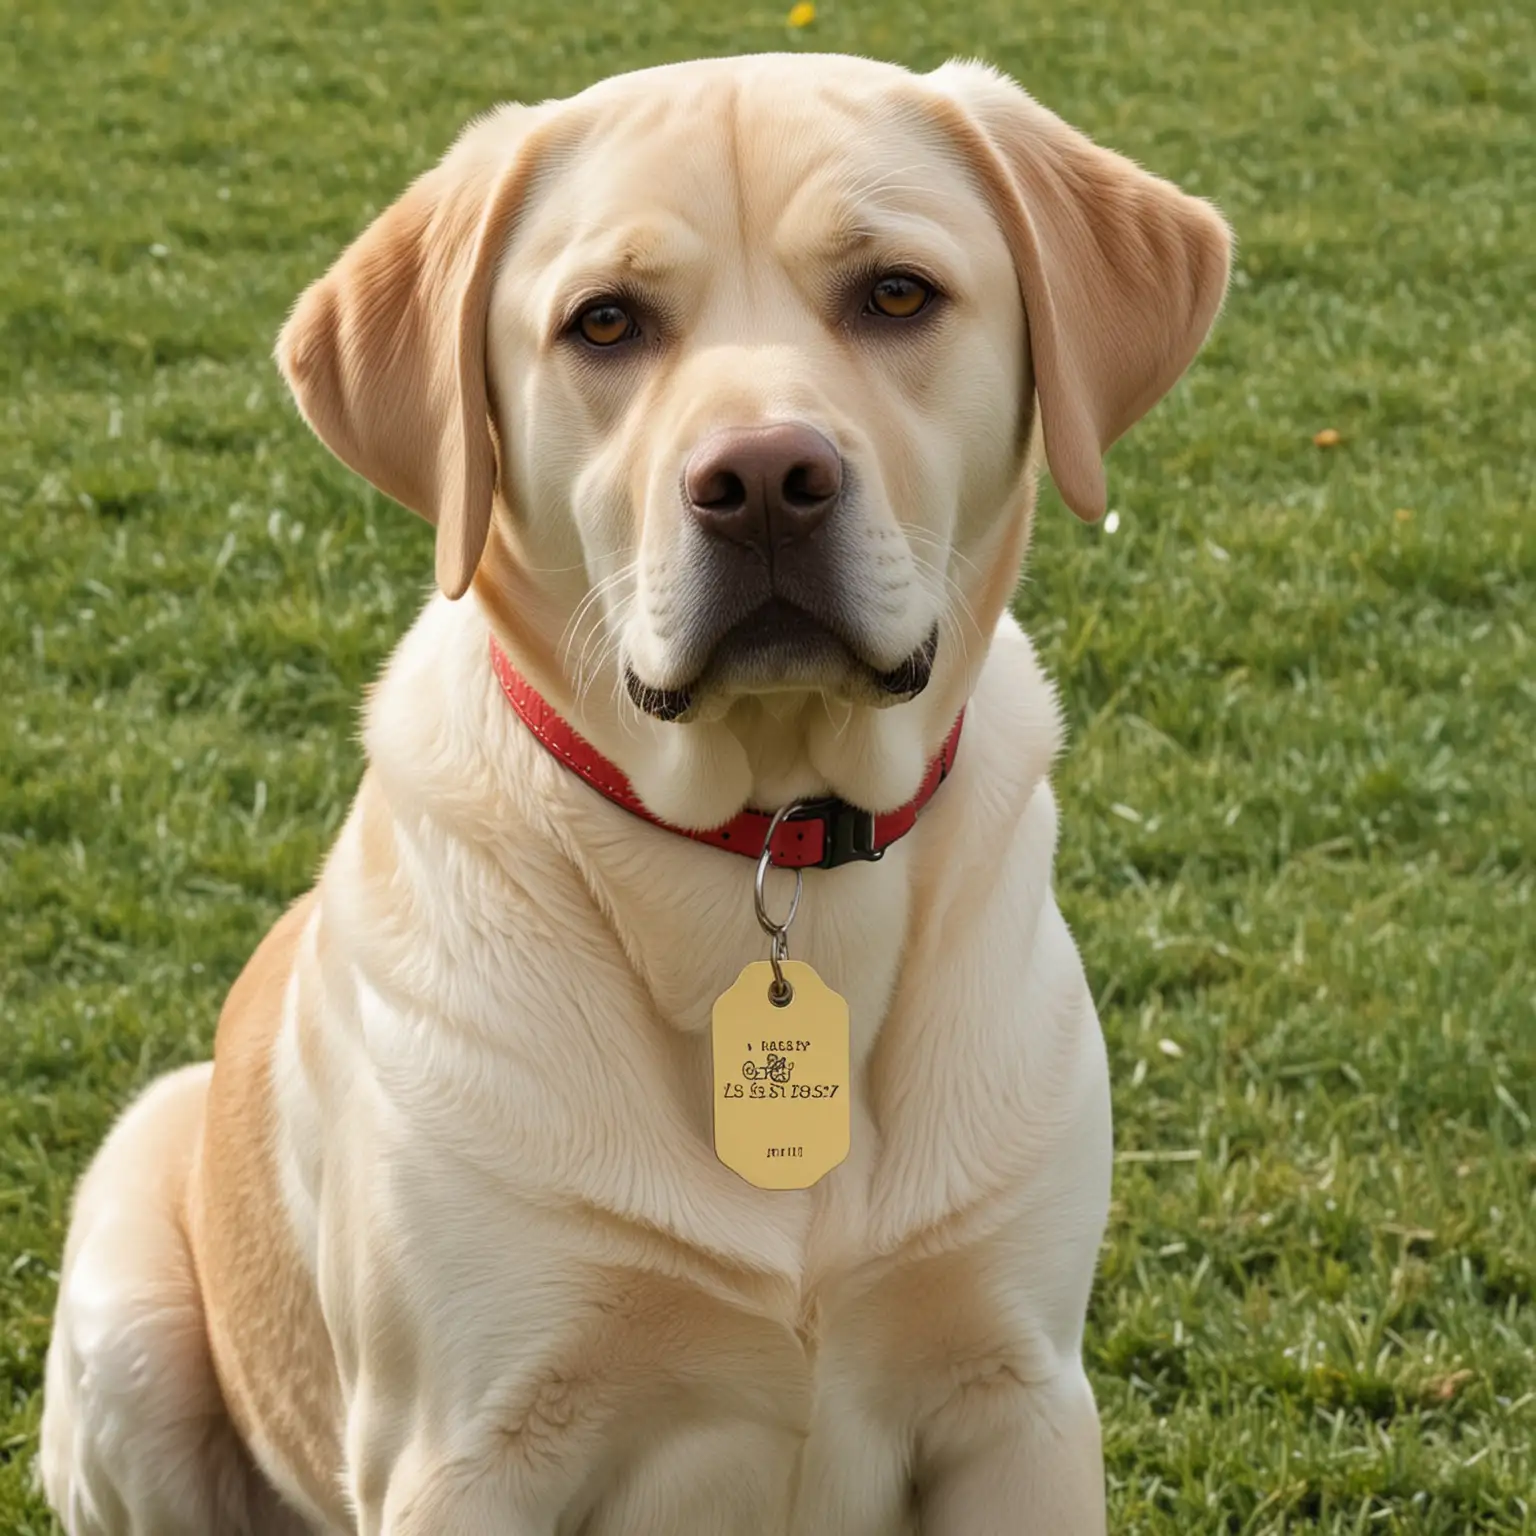 A Labrador Retriever with a shiny tag on its collar.